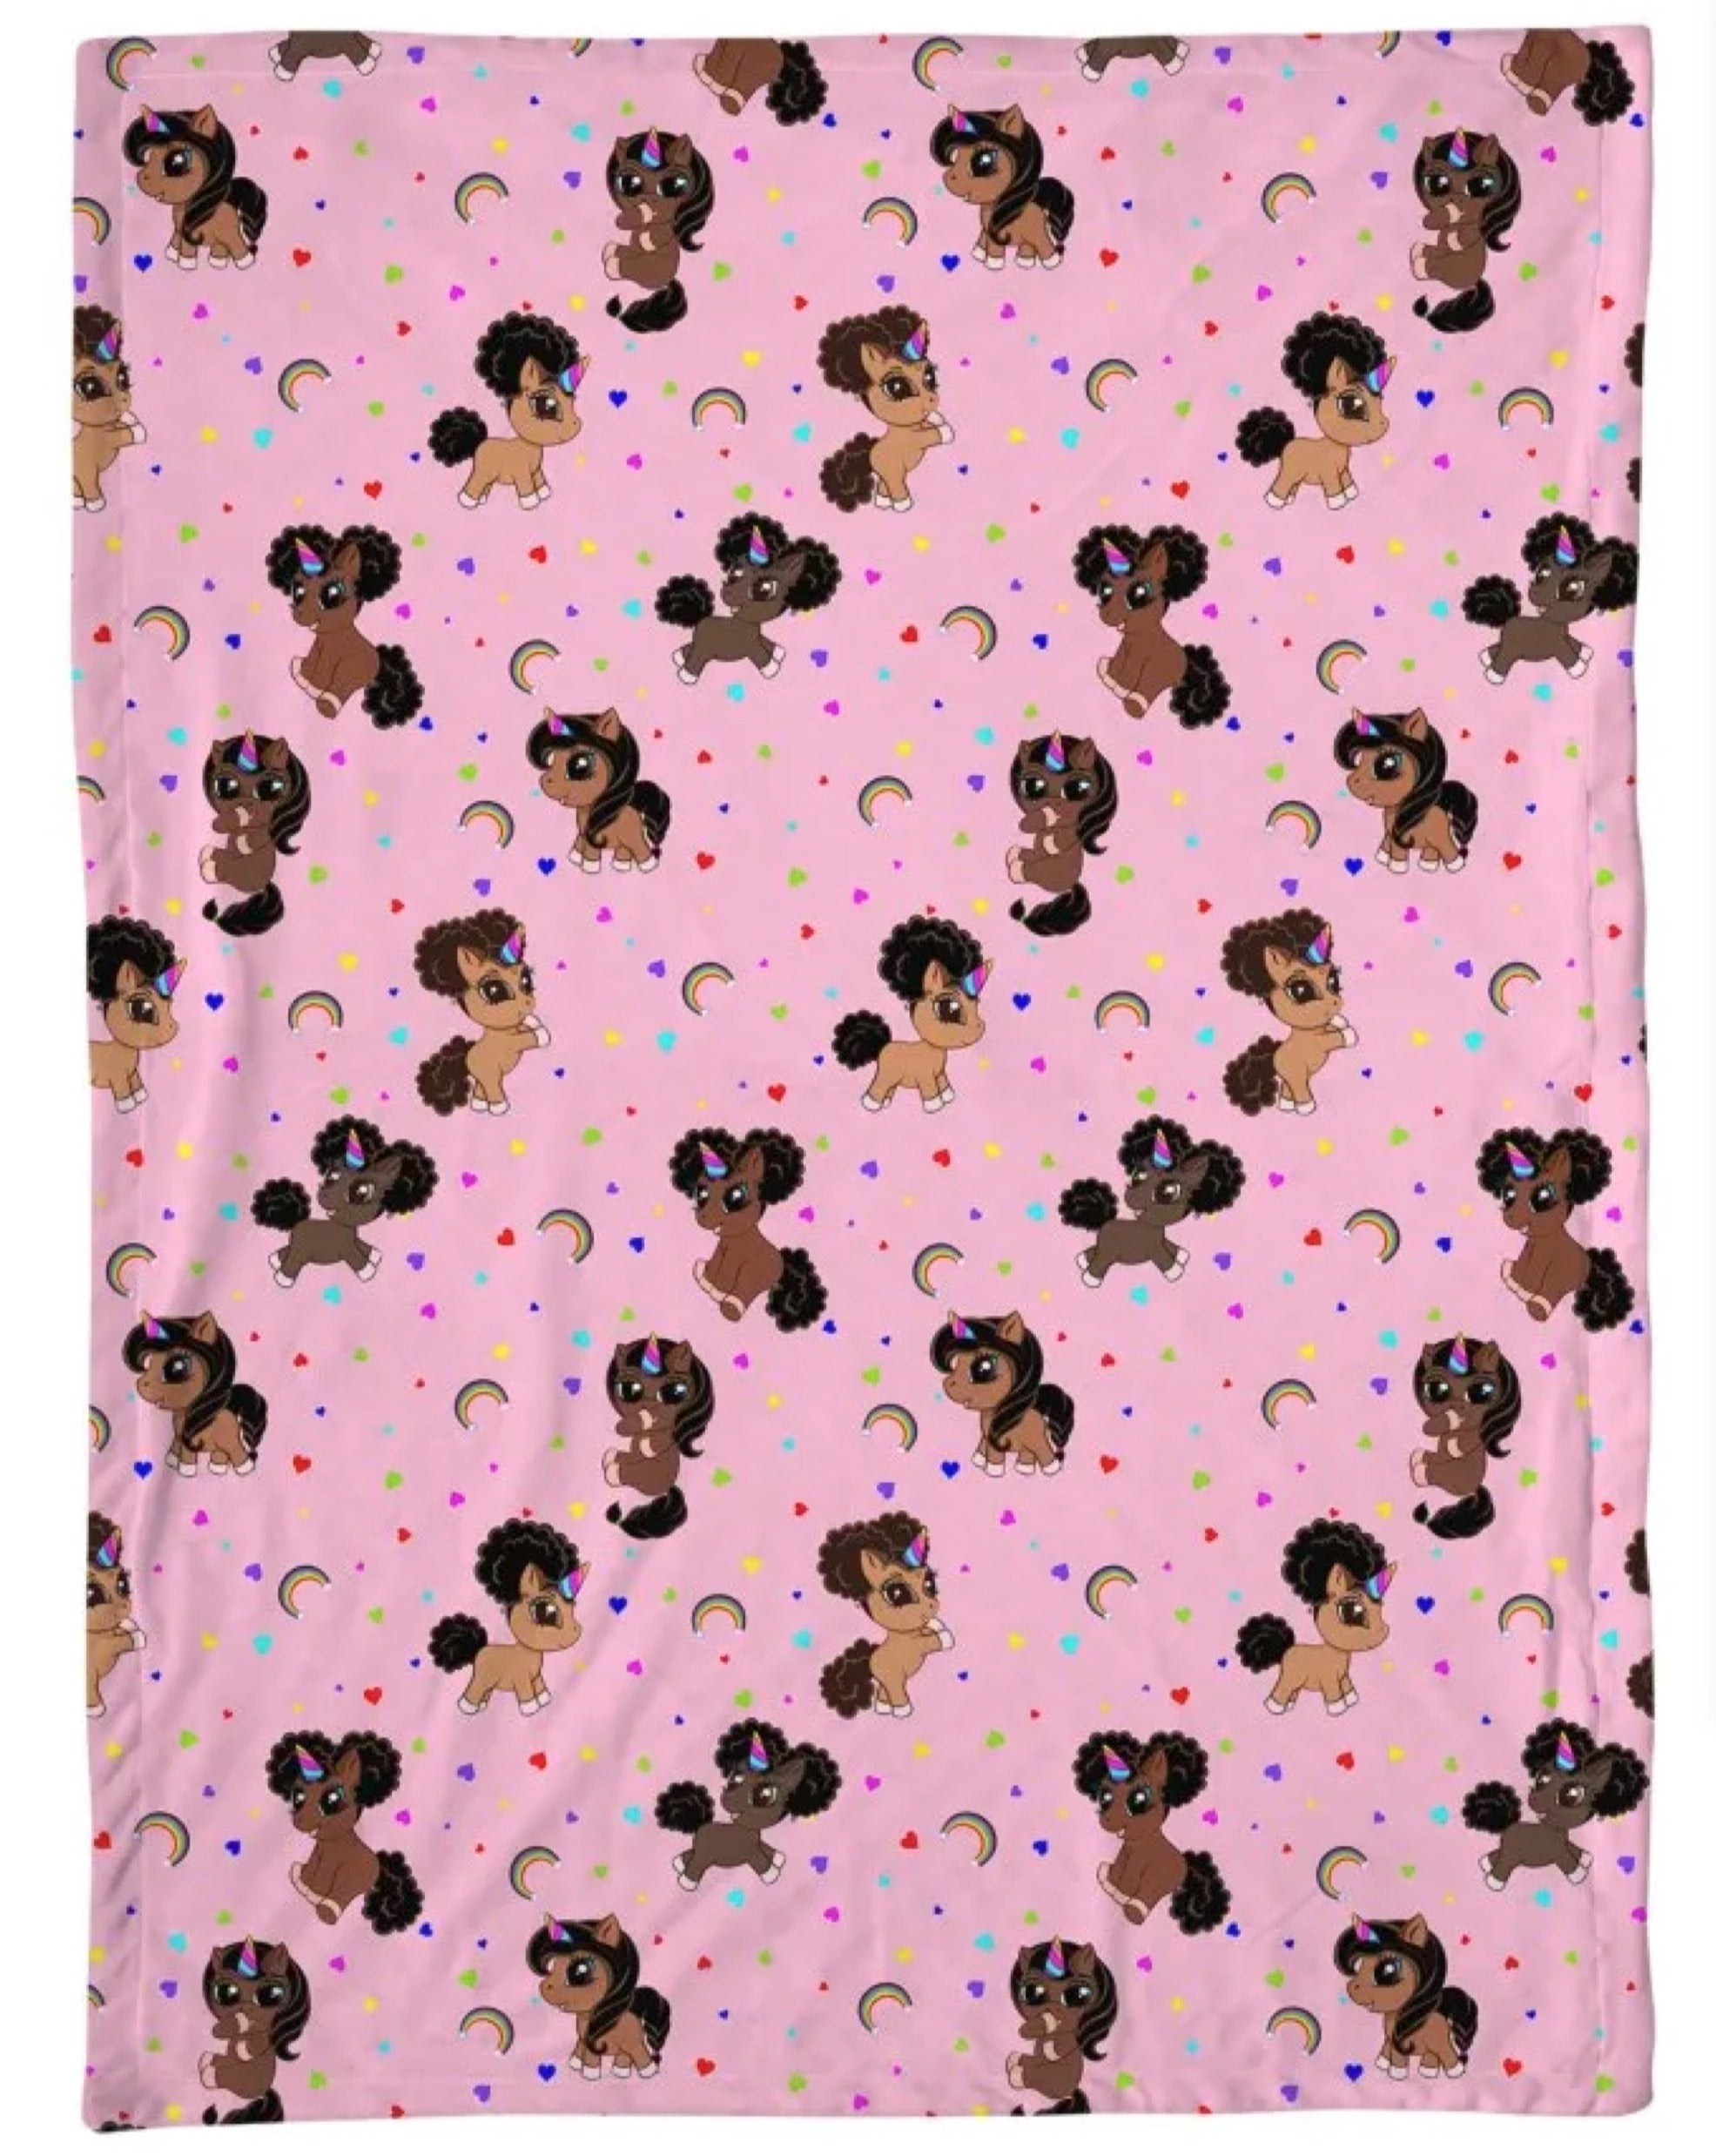 Baby Black Unicorn Allover Print Dotted Blanket - Blush Pink